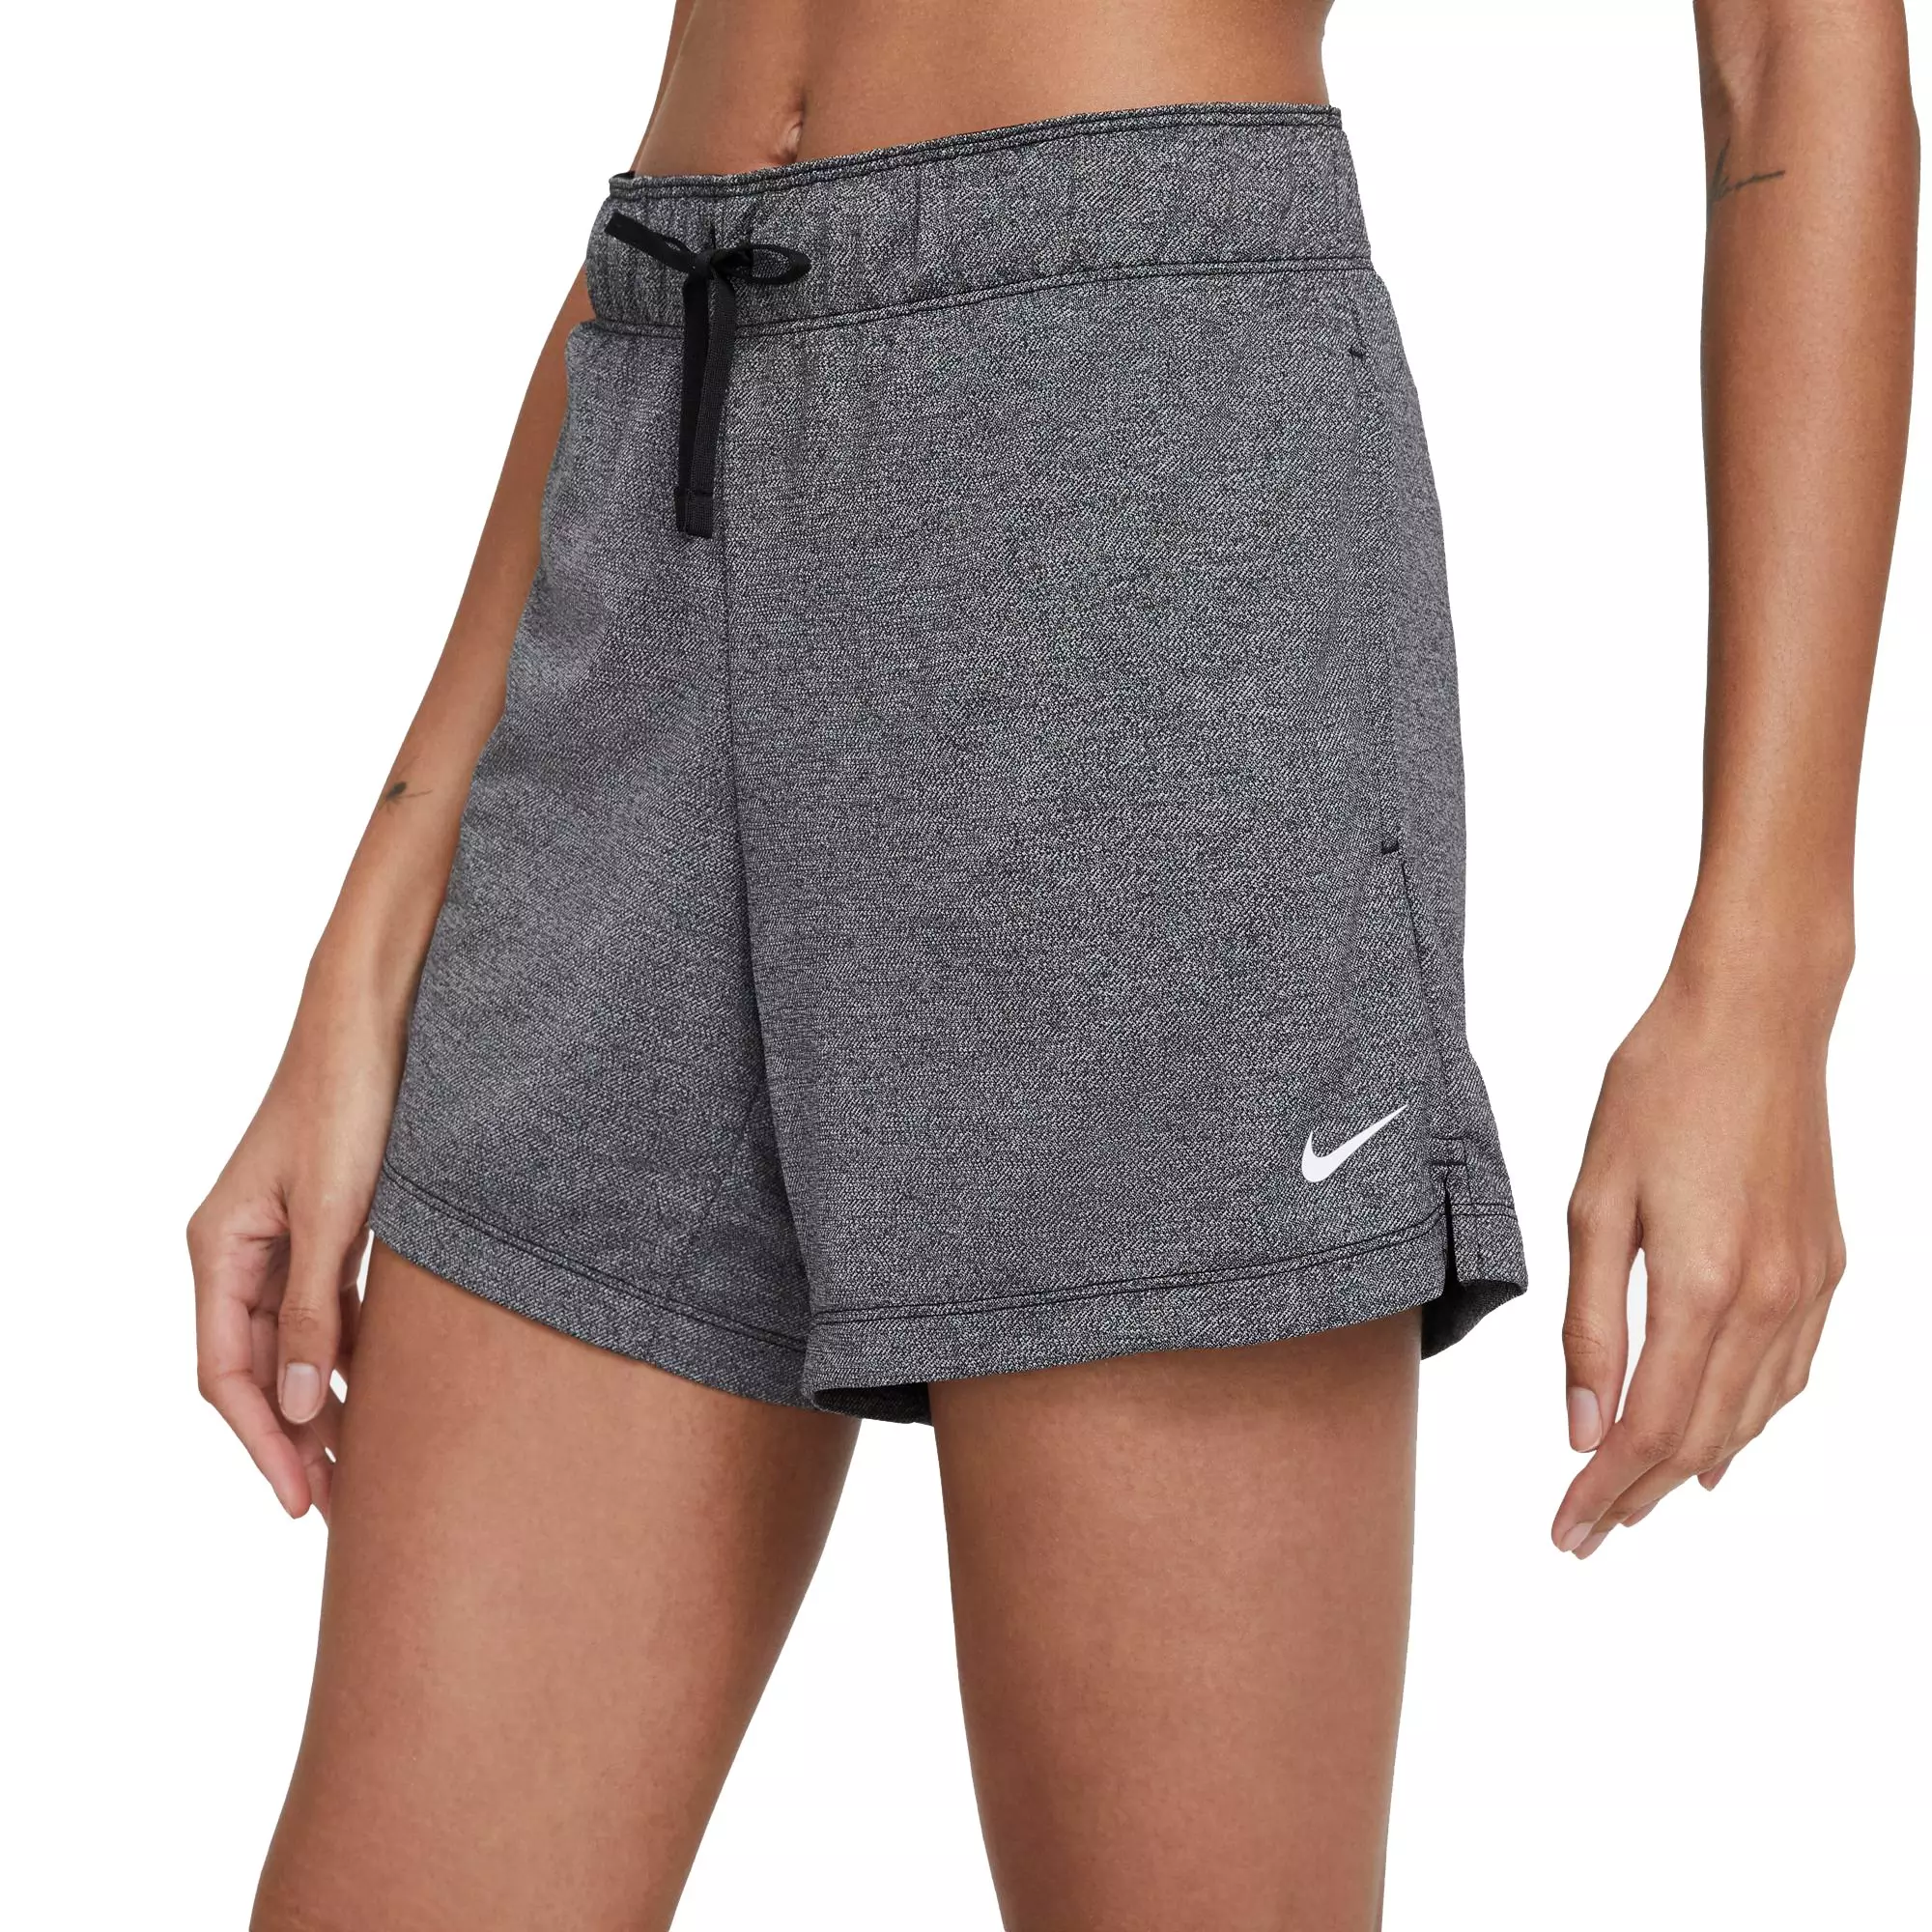 Nike Women's Dri-FIT Attack Training Shorts (Small, s) Black